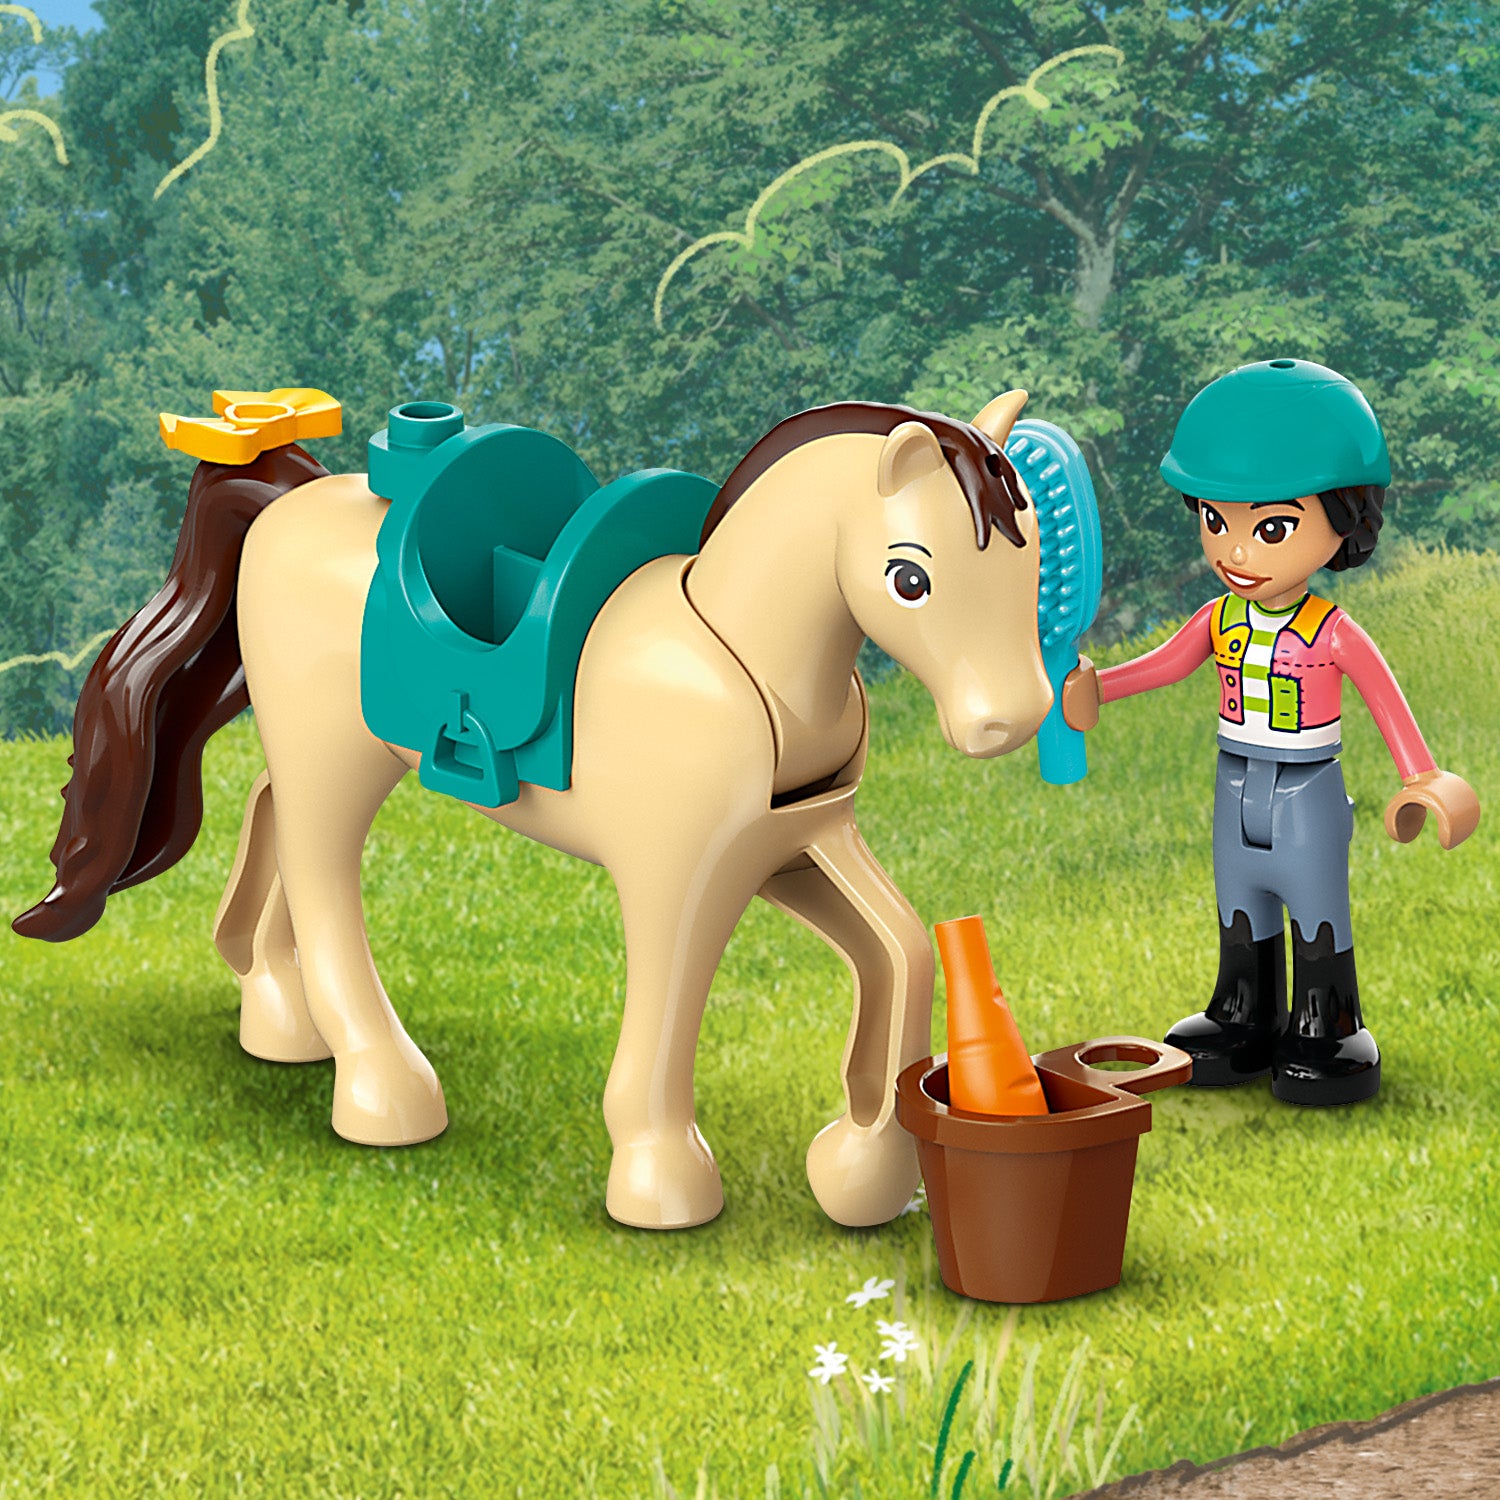 Lego 42634 Horse & Pony Trailer